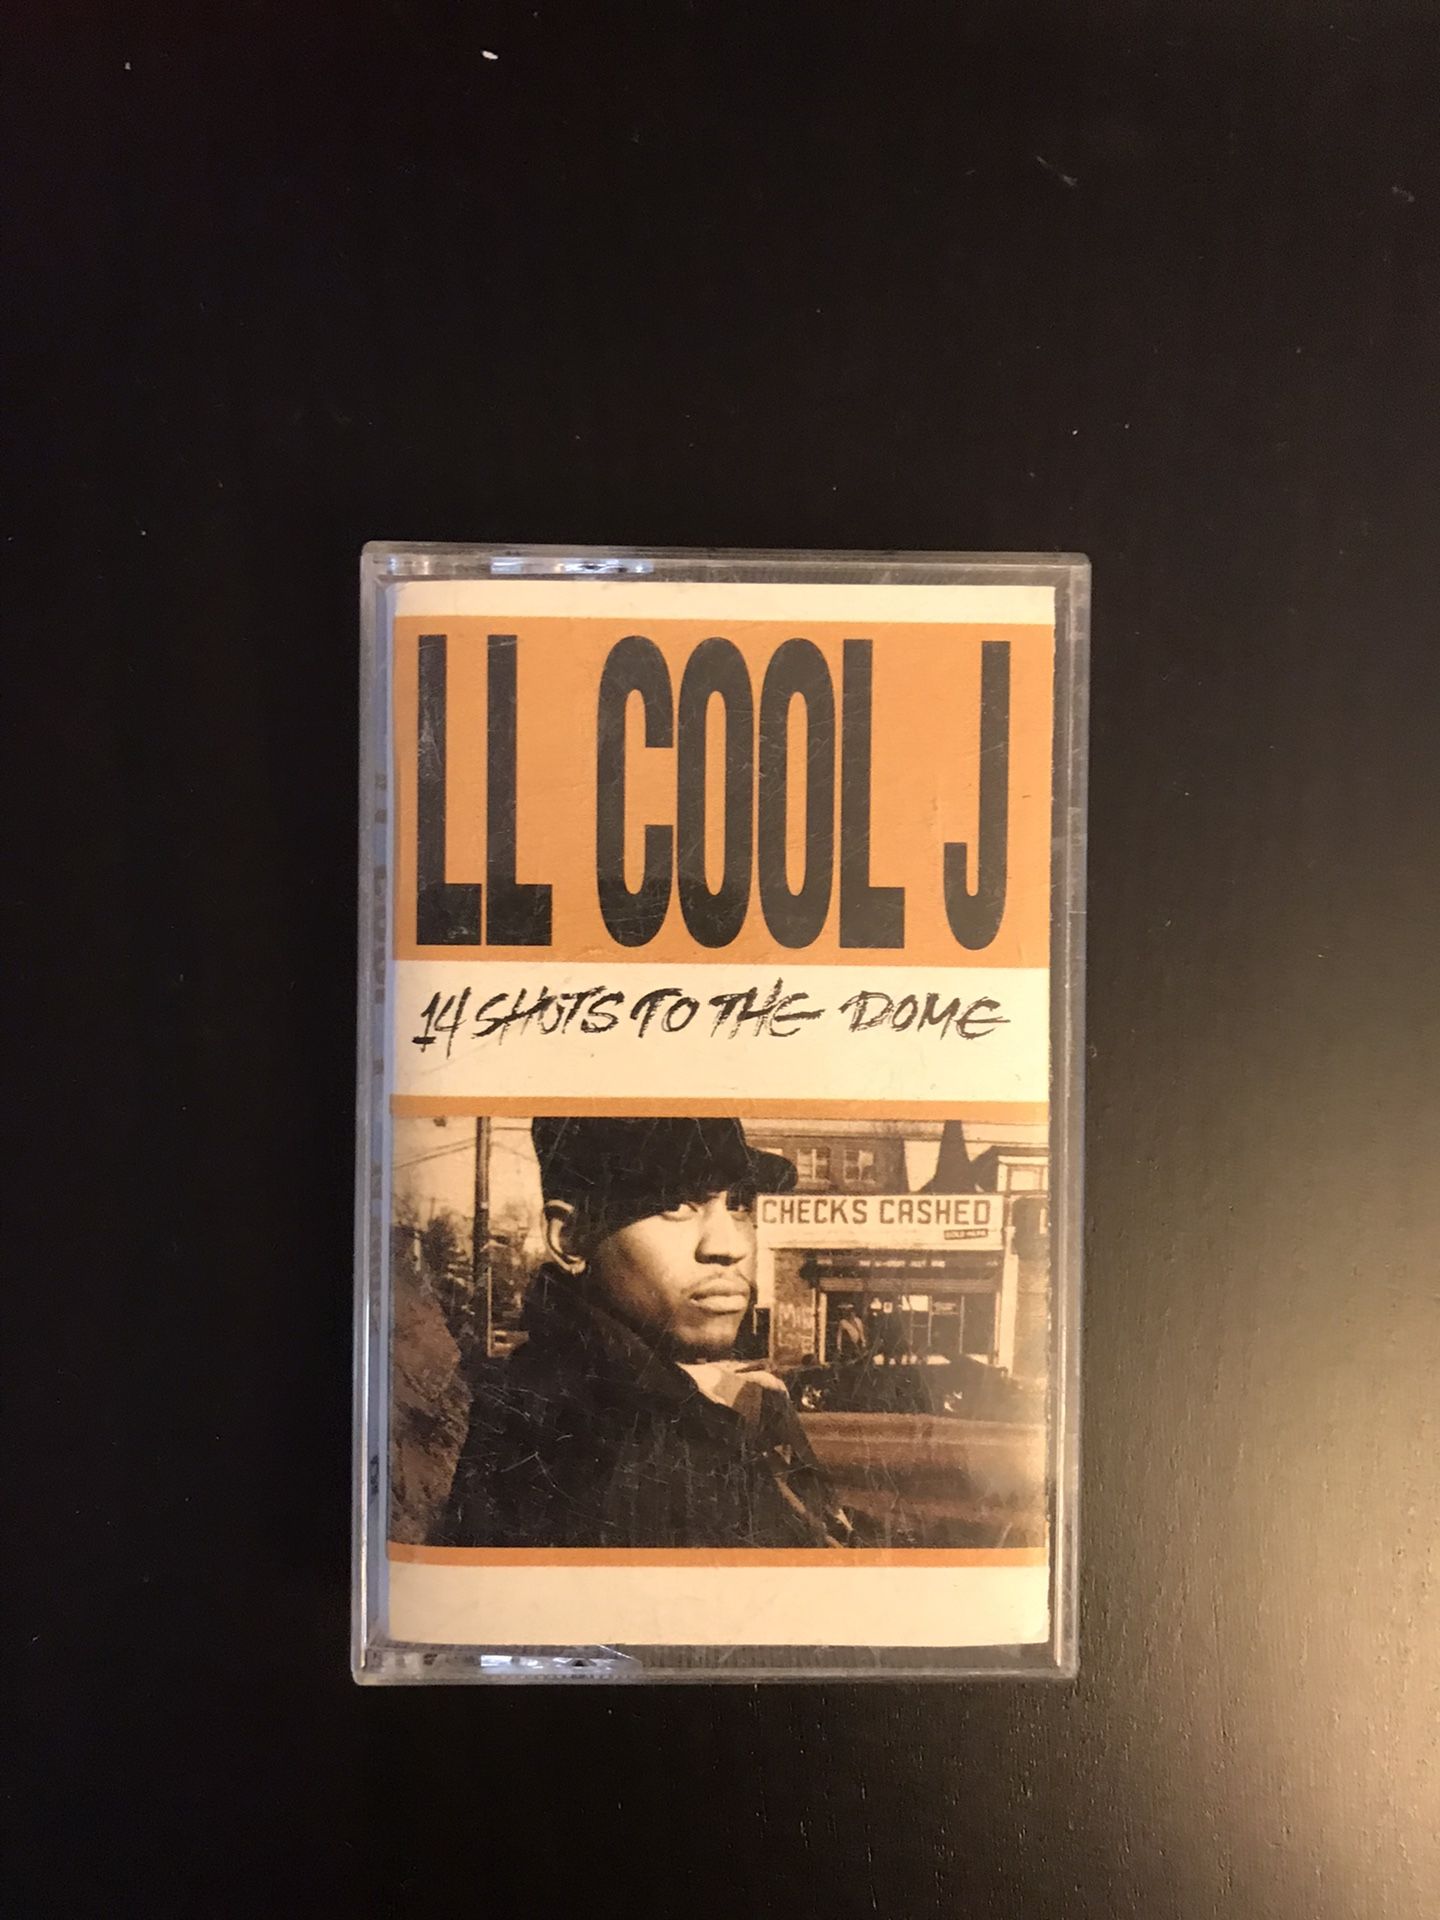 LL Cool J Cassette